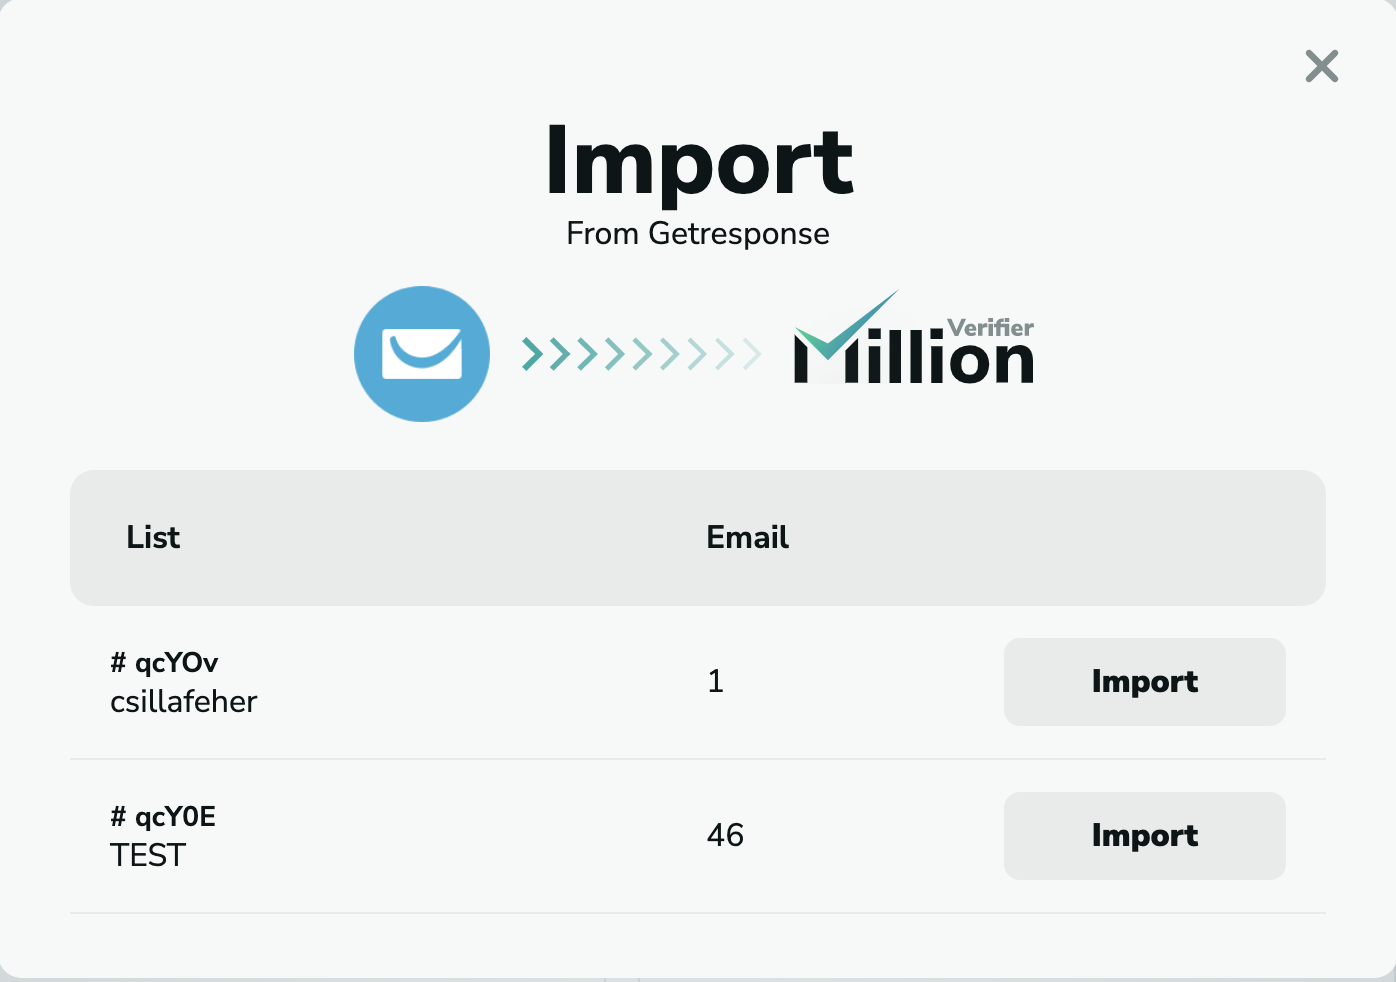 Getresponse import emails in MillionVerifier